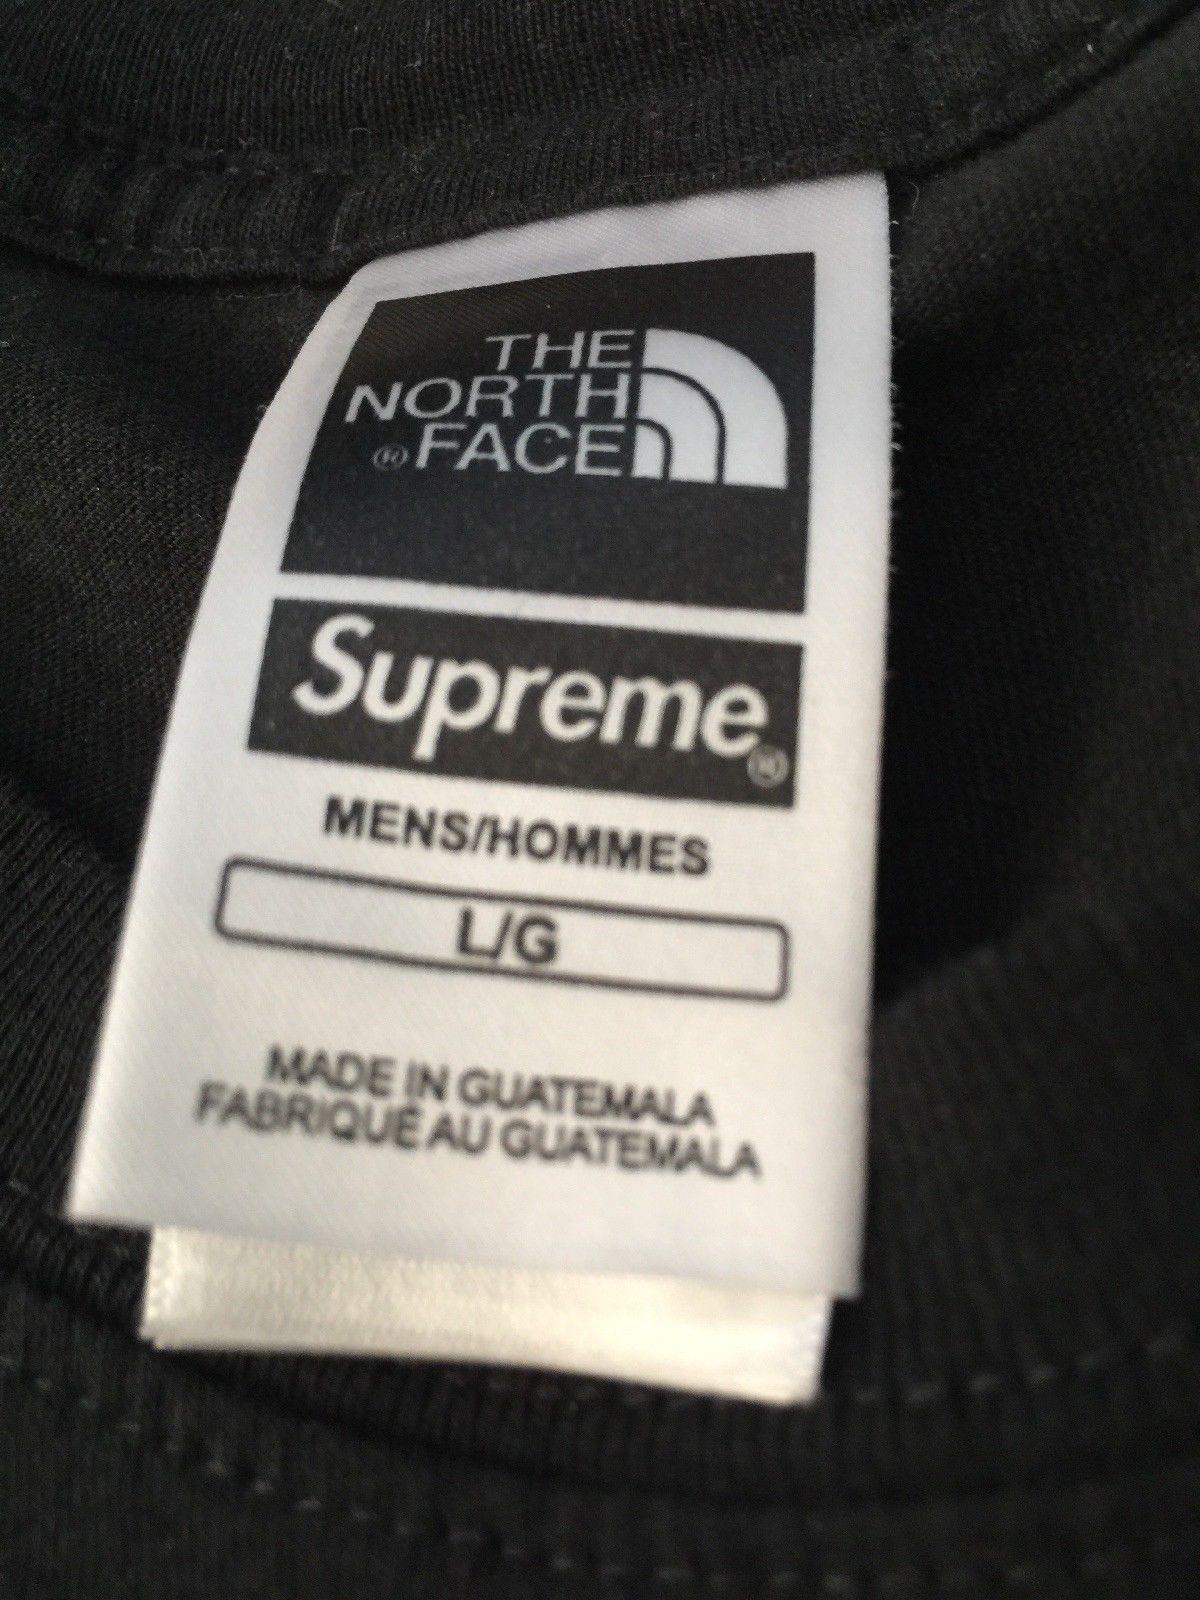 Supreme BAPE Polo Logo - Details About Supreme 18SS THE NORTH FACE Metallic Logo T Shirt